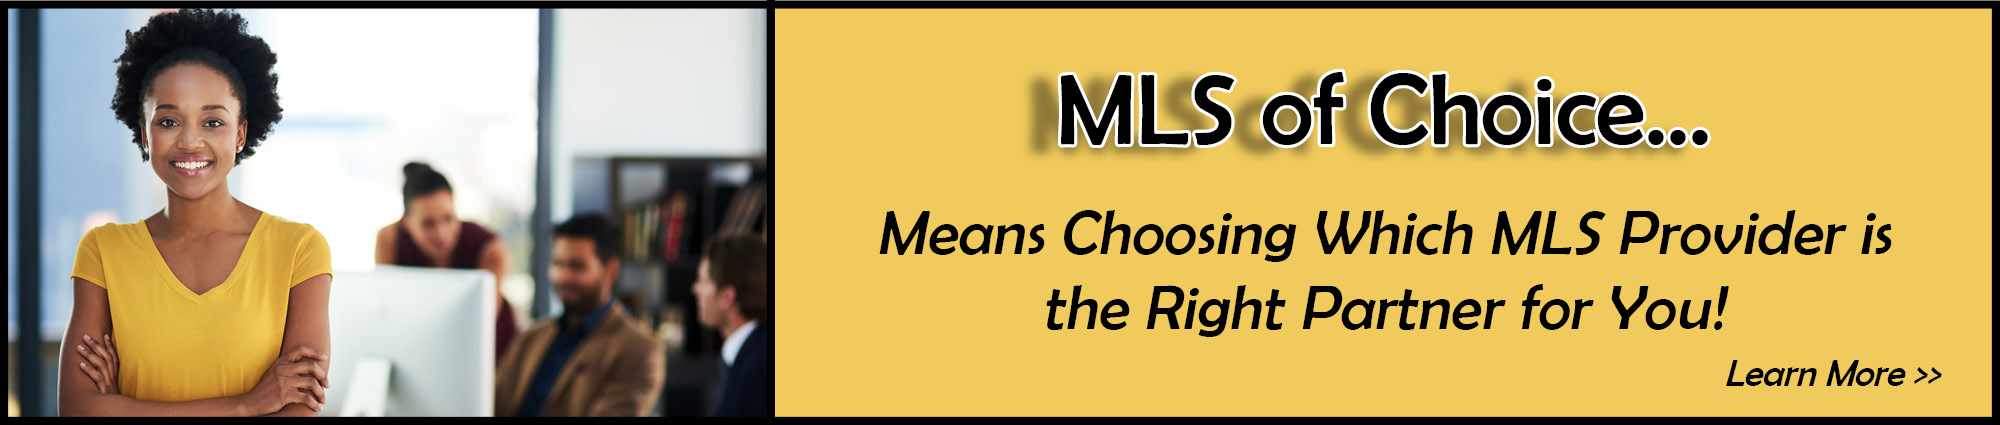 MLS of Choice